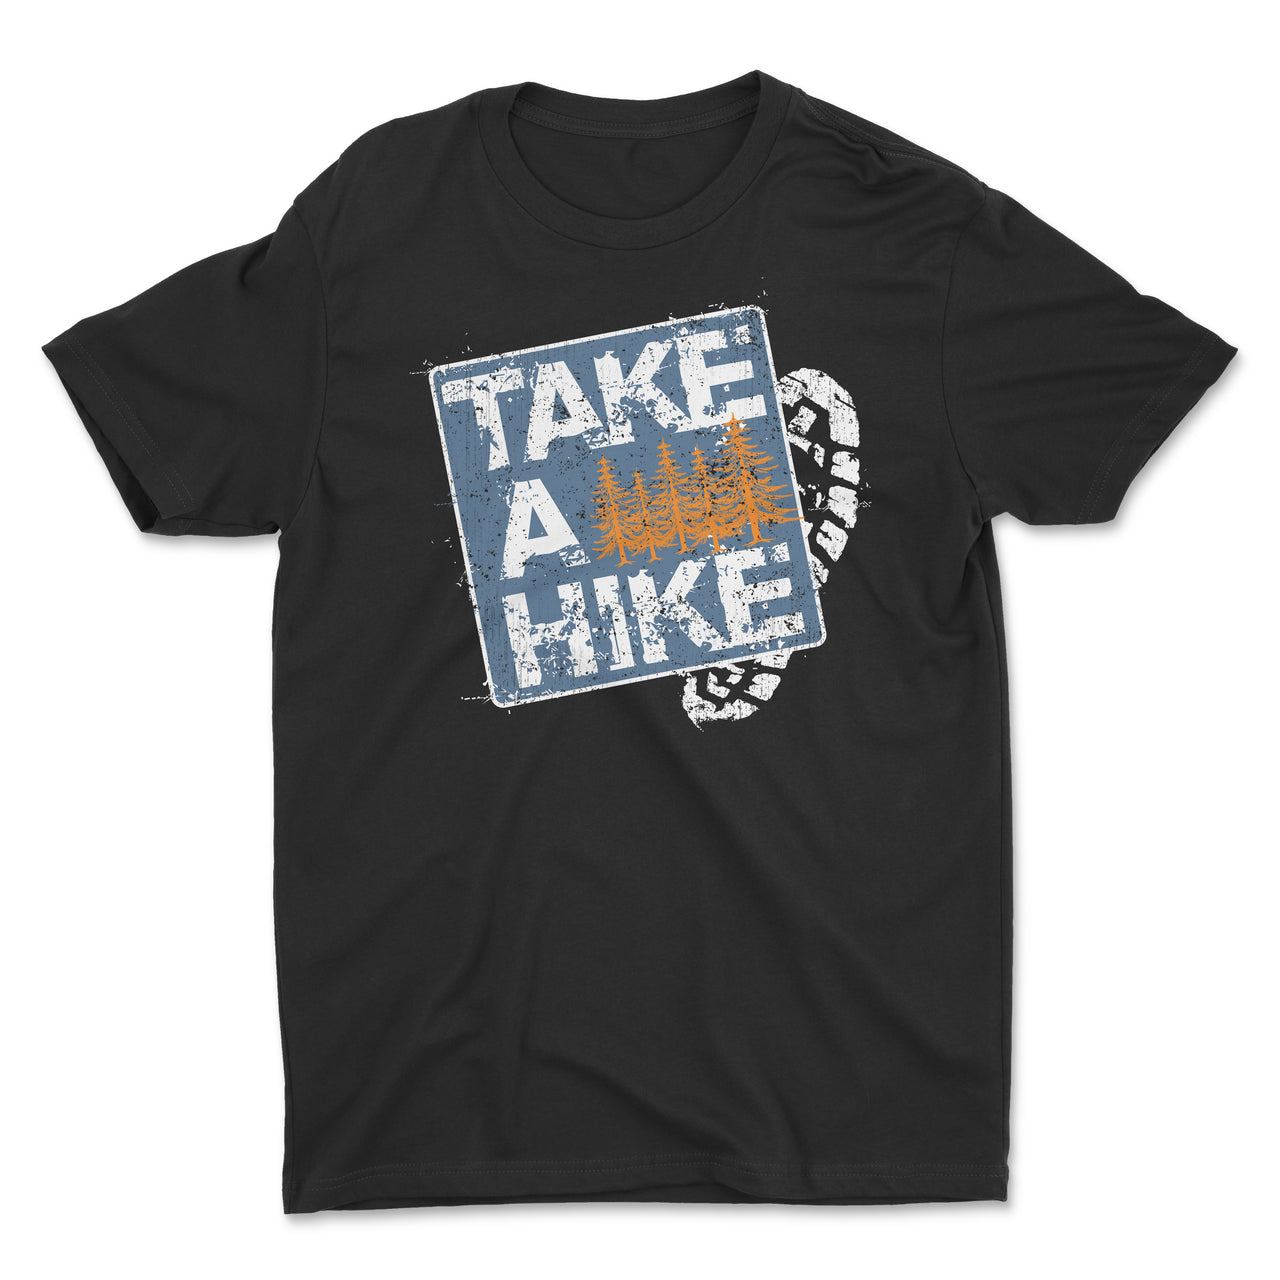 Take a Hike Kids Shirt